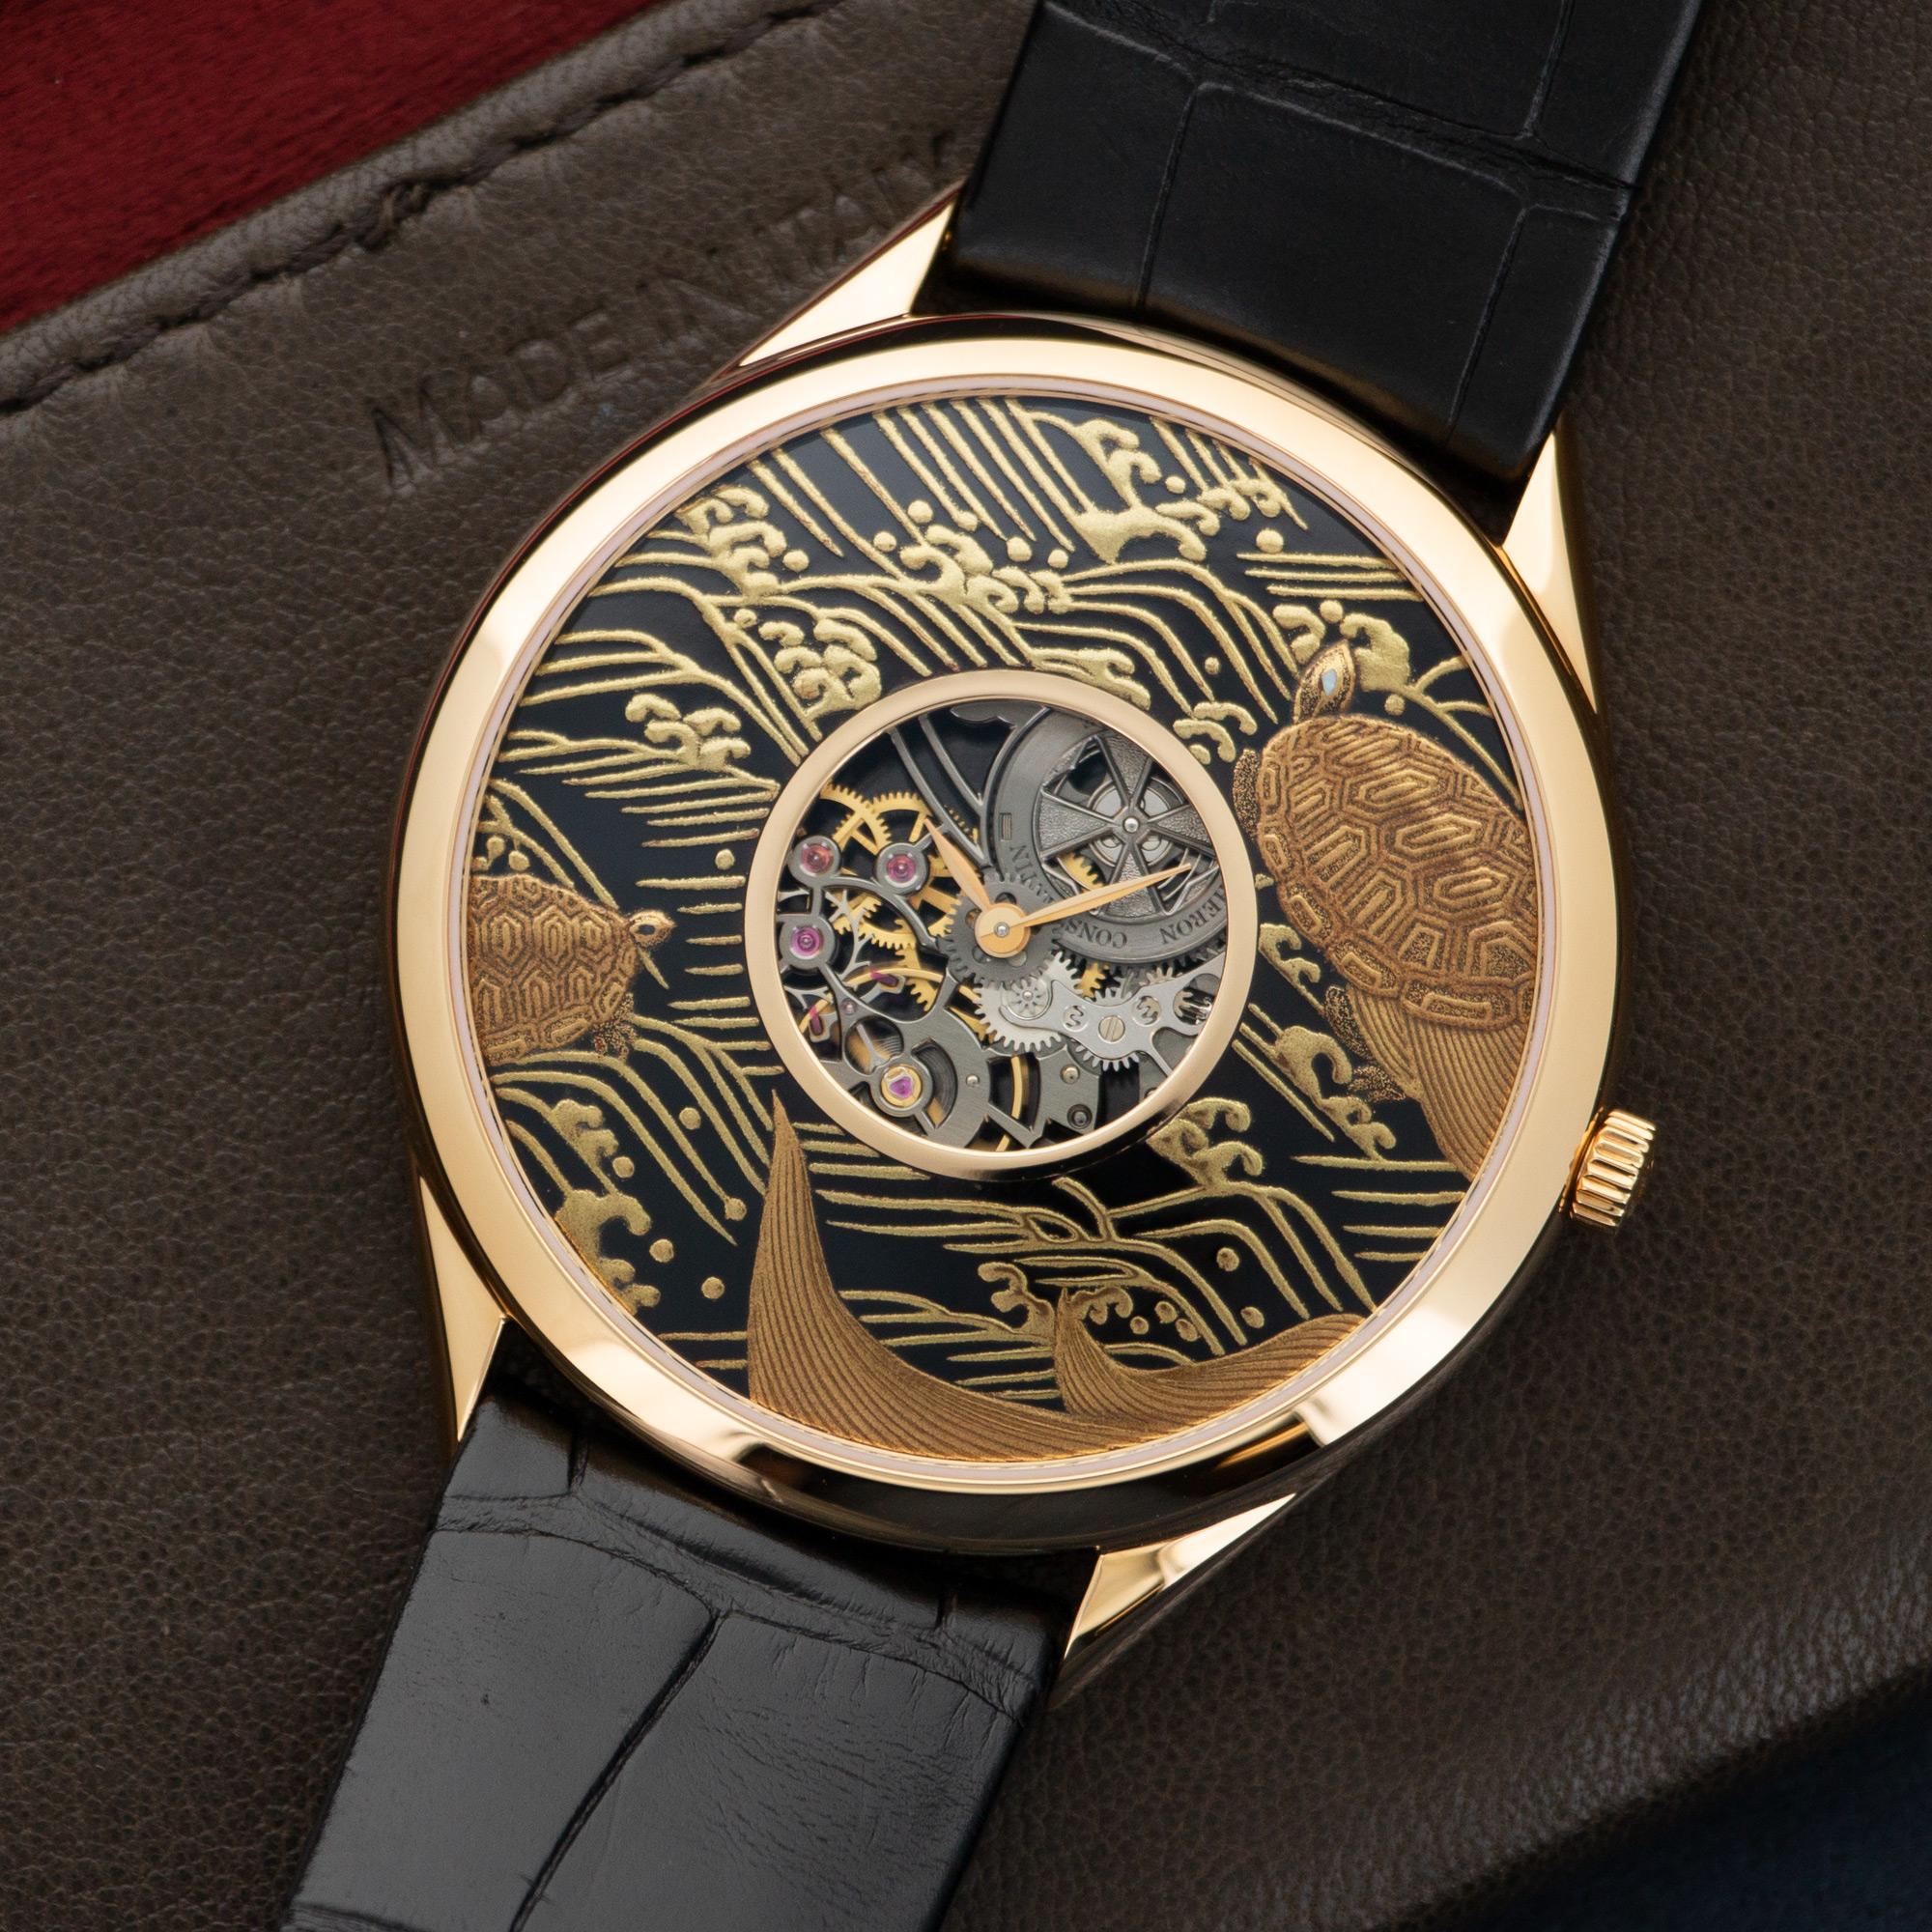 An 18k Rose Gold Enamel Dial Skeleton Watch by Vacheron Constantin. Model 33222/000R-9548. 40mm Diameter. Extraordinary Limited Edition Watch